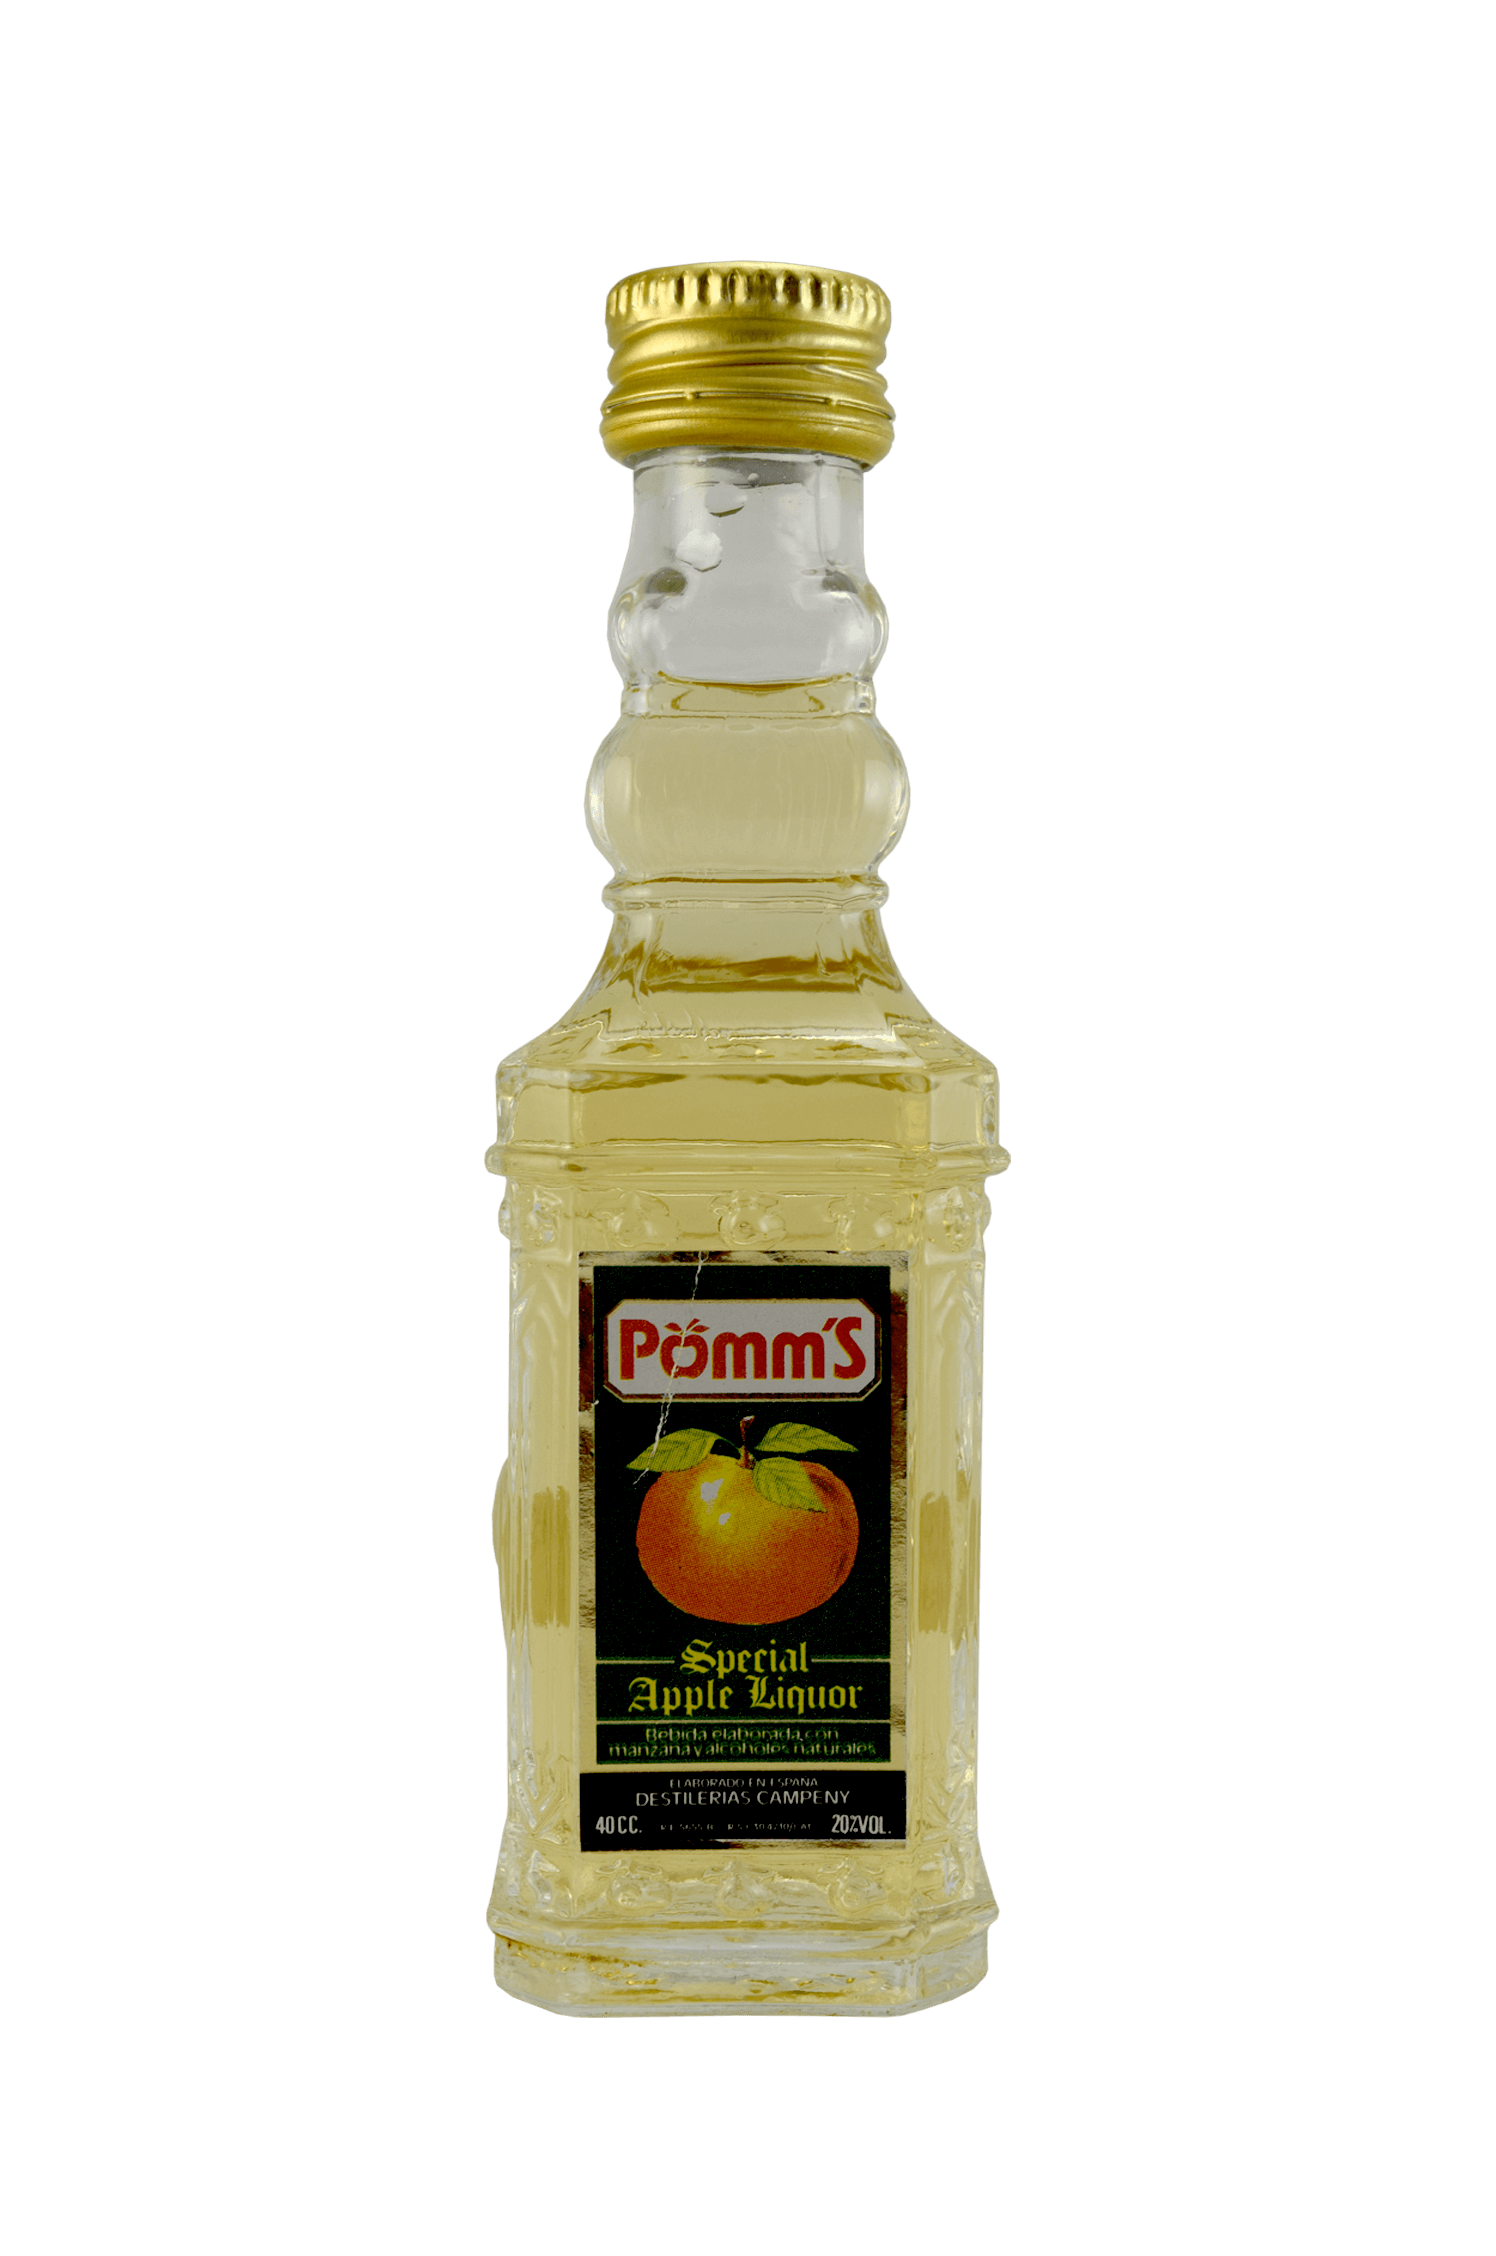 Pomms Special Apple Liquor